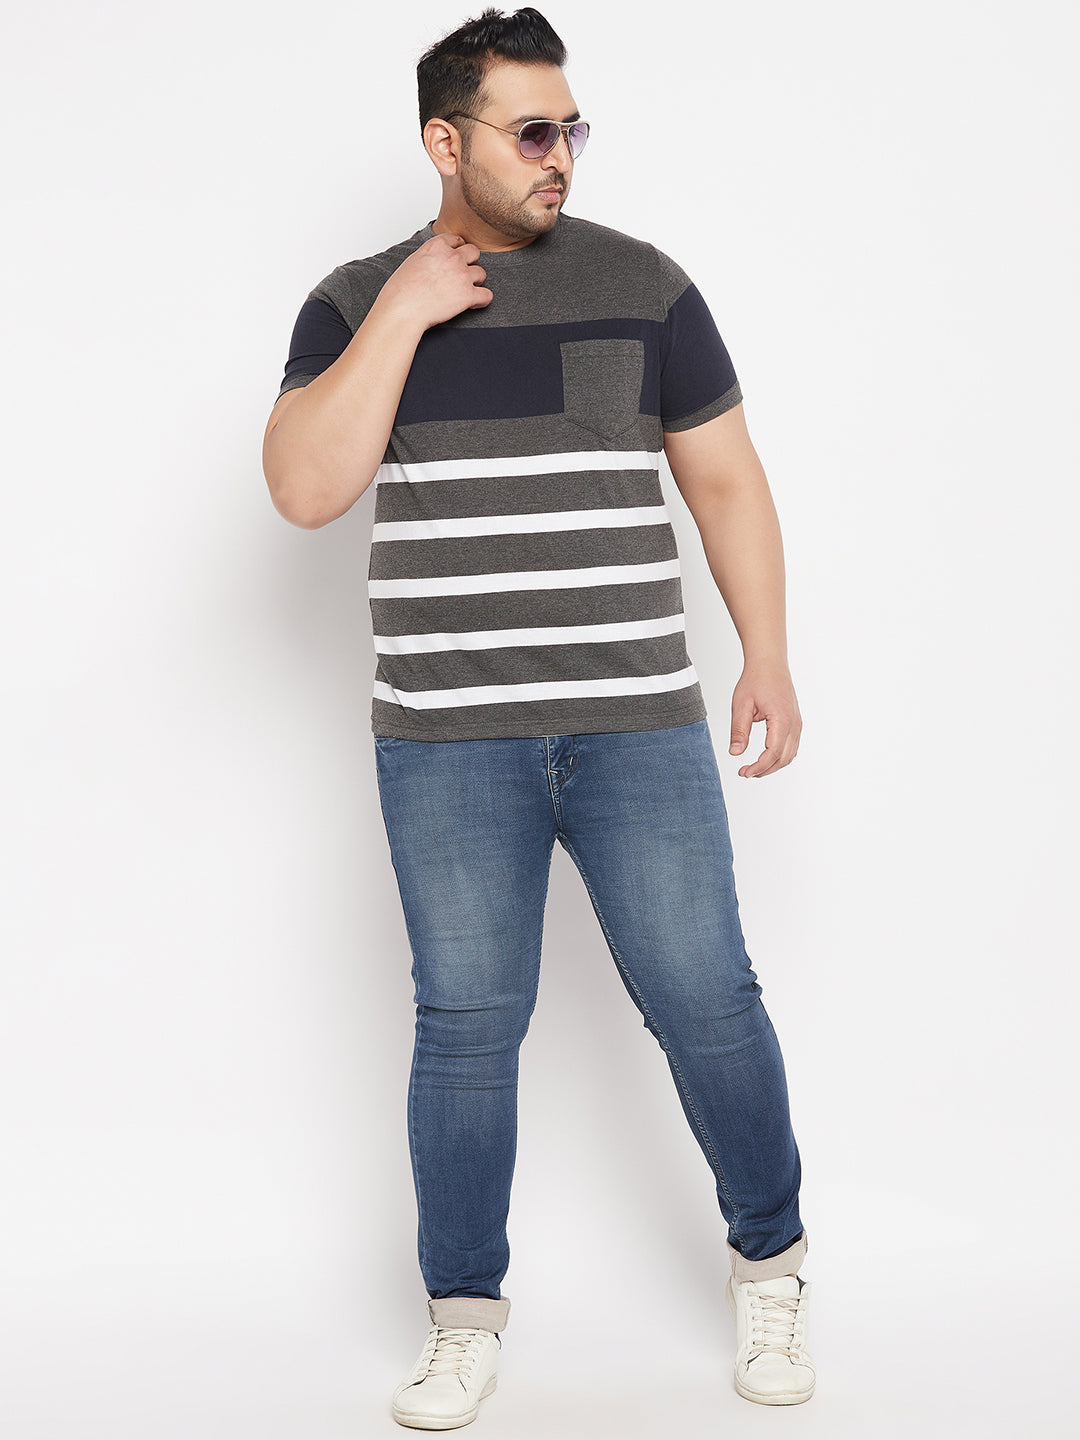 Austivo Striped Men Round Neck Multicolor T-Shirt